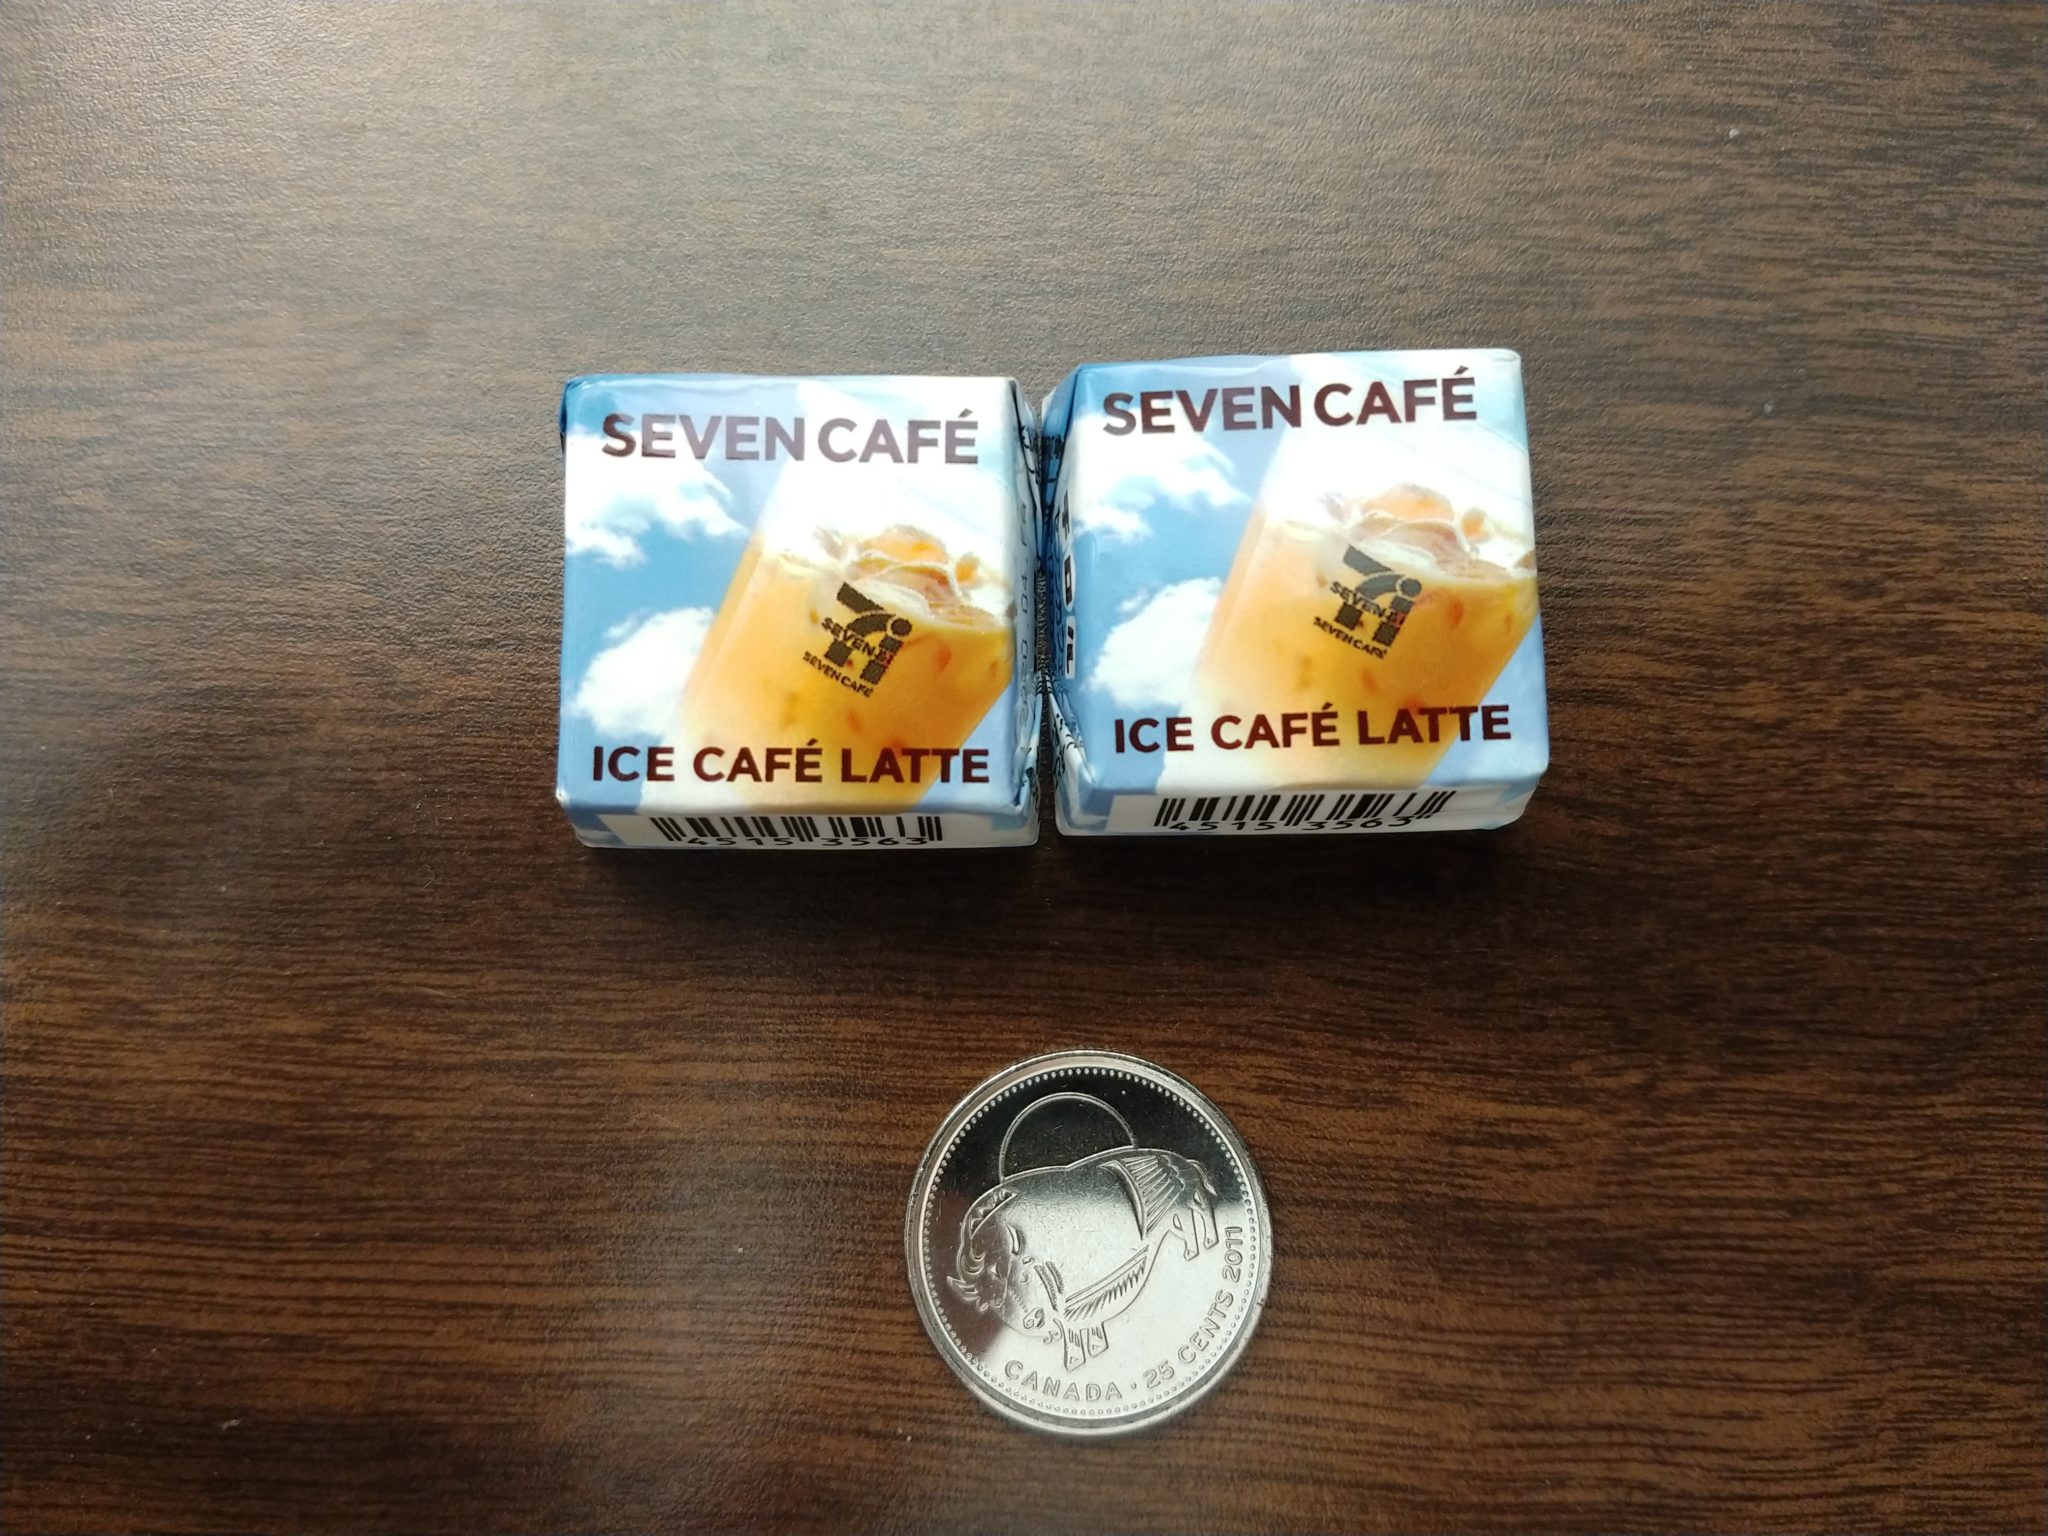 Tirol Chocolate – Seven Cafe Ice Cafe Latte